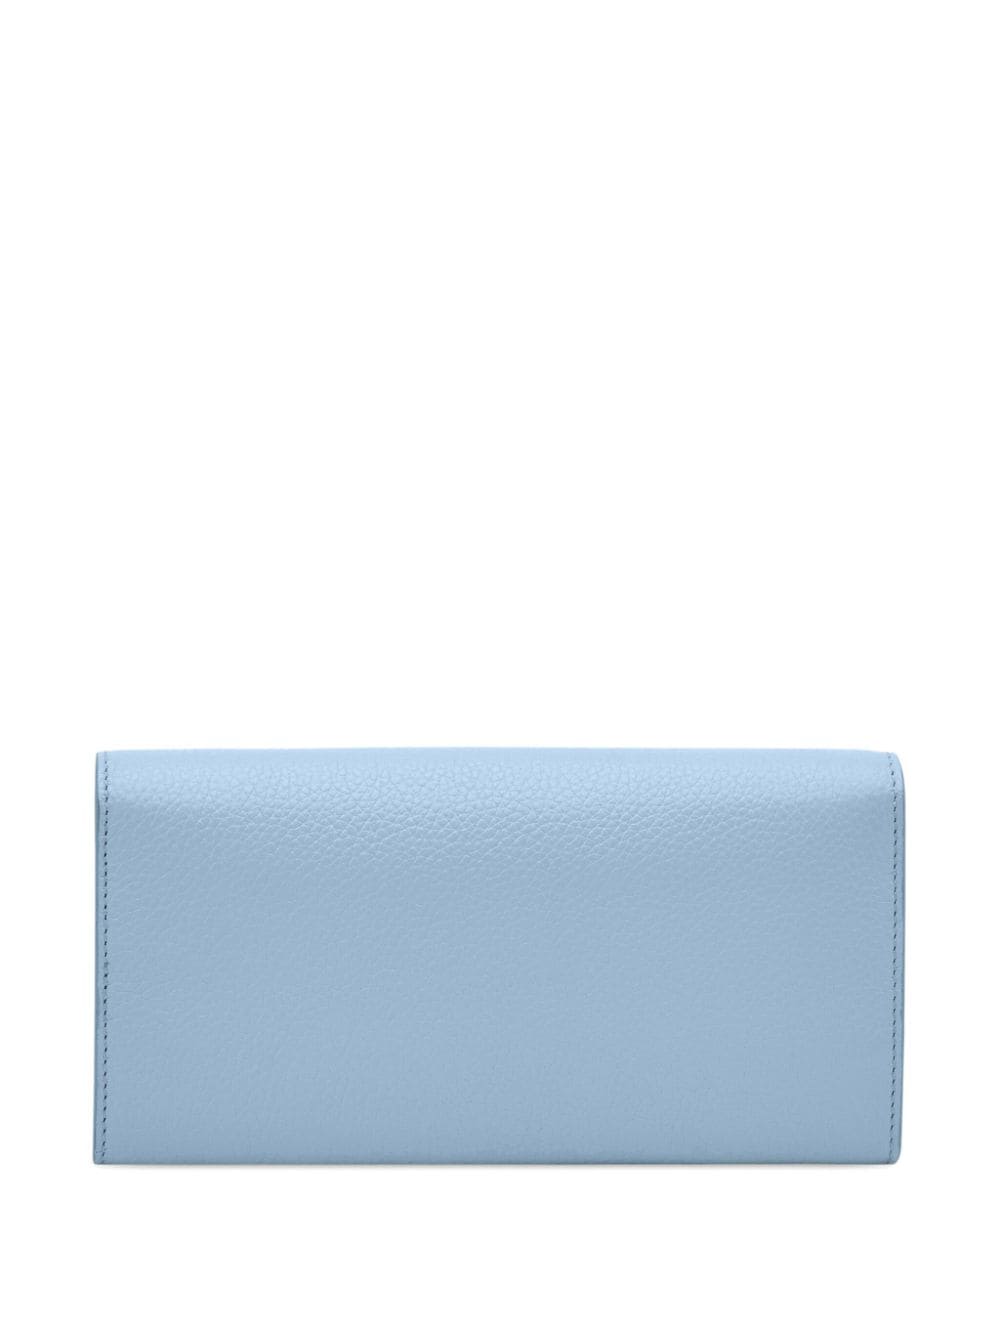 Ferragamo Gancini leather chain wallet - Blauw